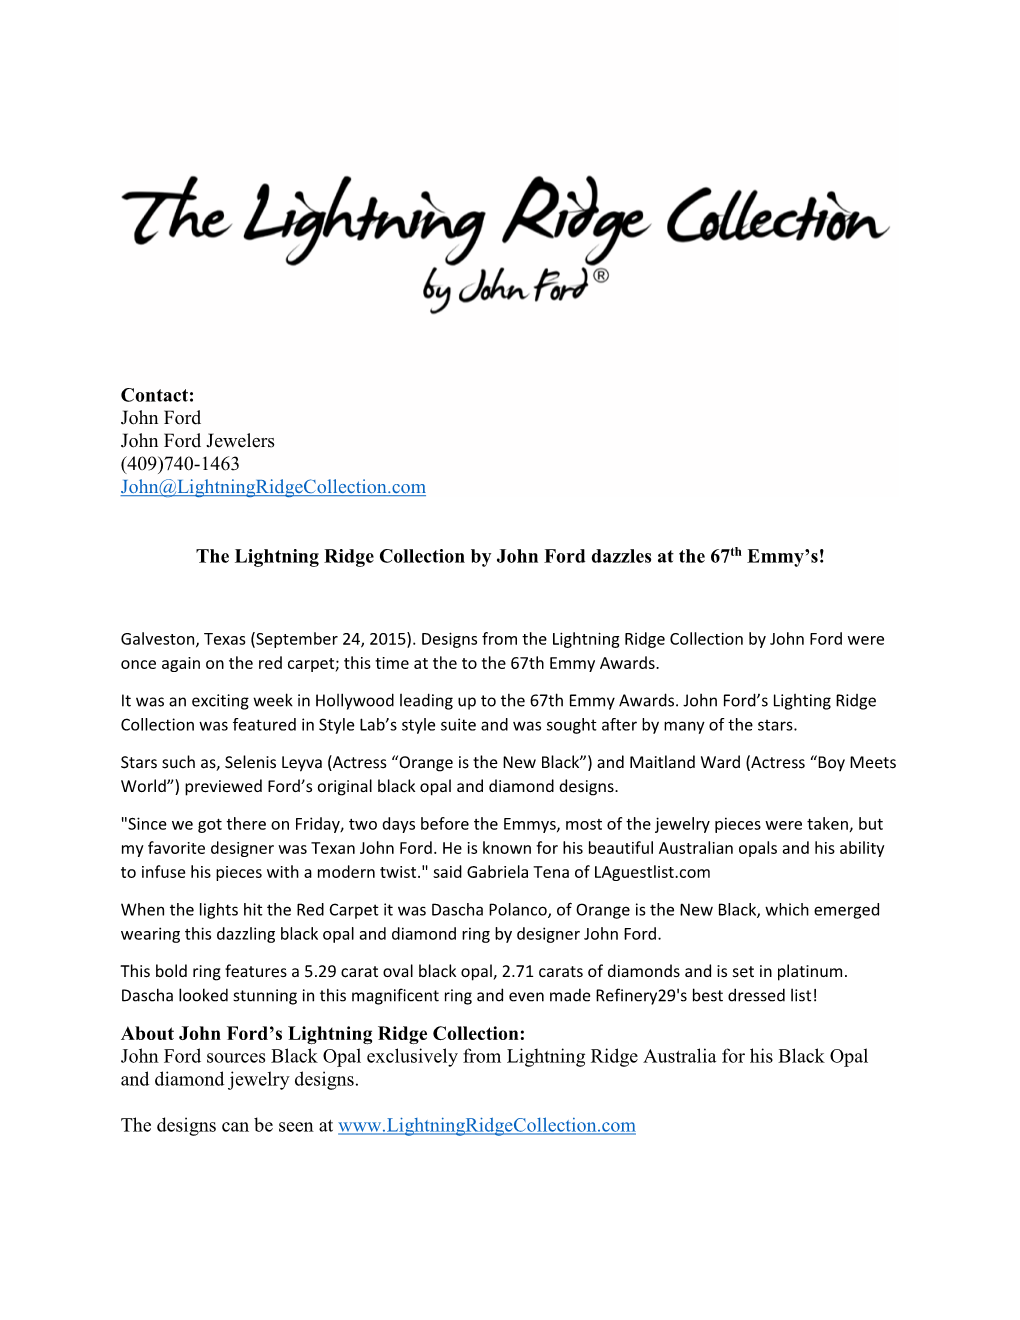 John Ford John Ford Jewelers (409)740-1463 John@Lightningridgecollection.Com